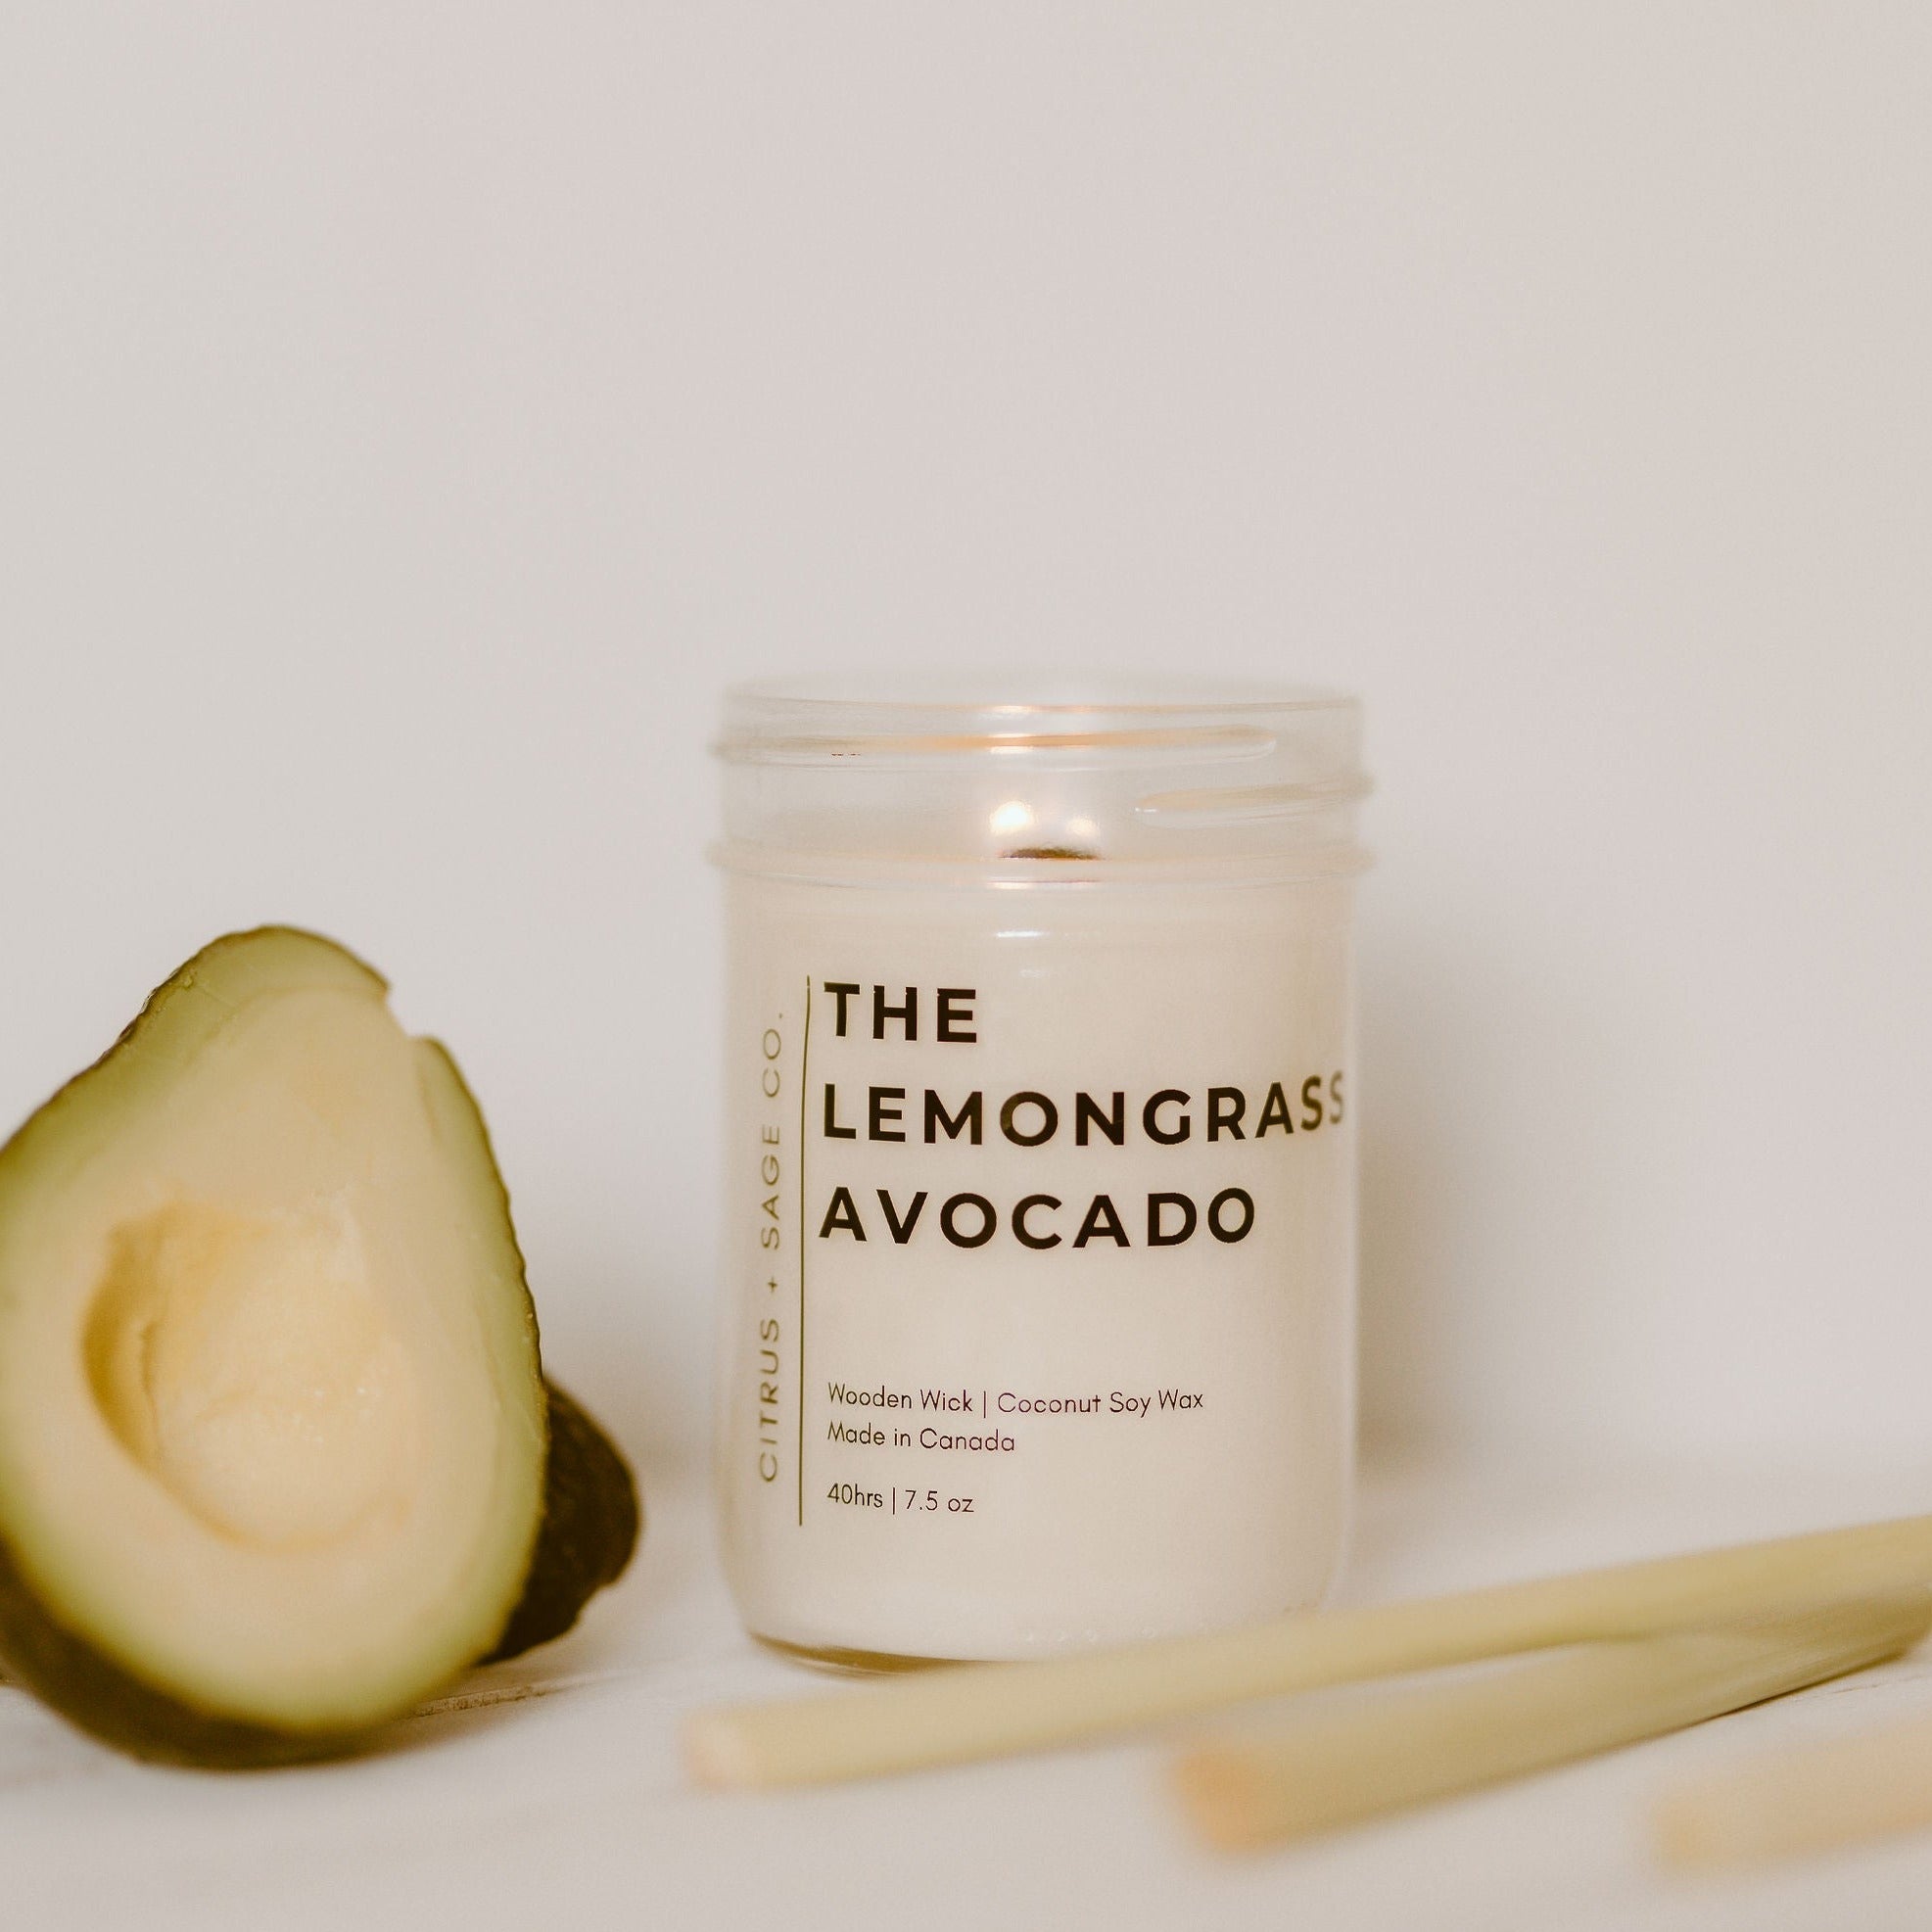 mason jar candle with avocado and lemongrass beside it